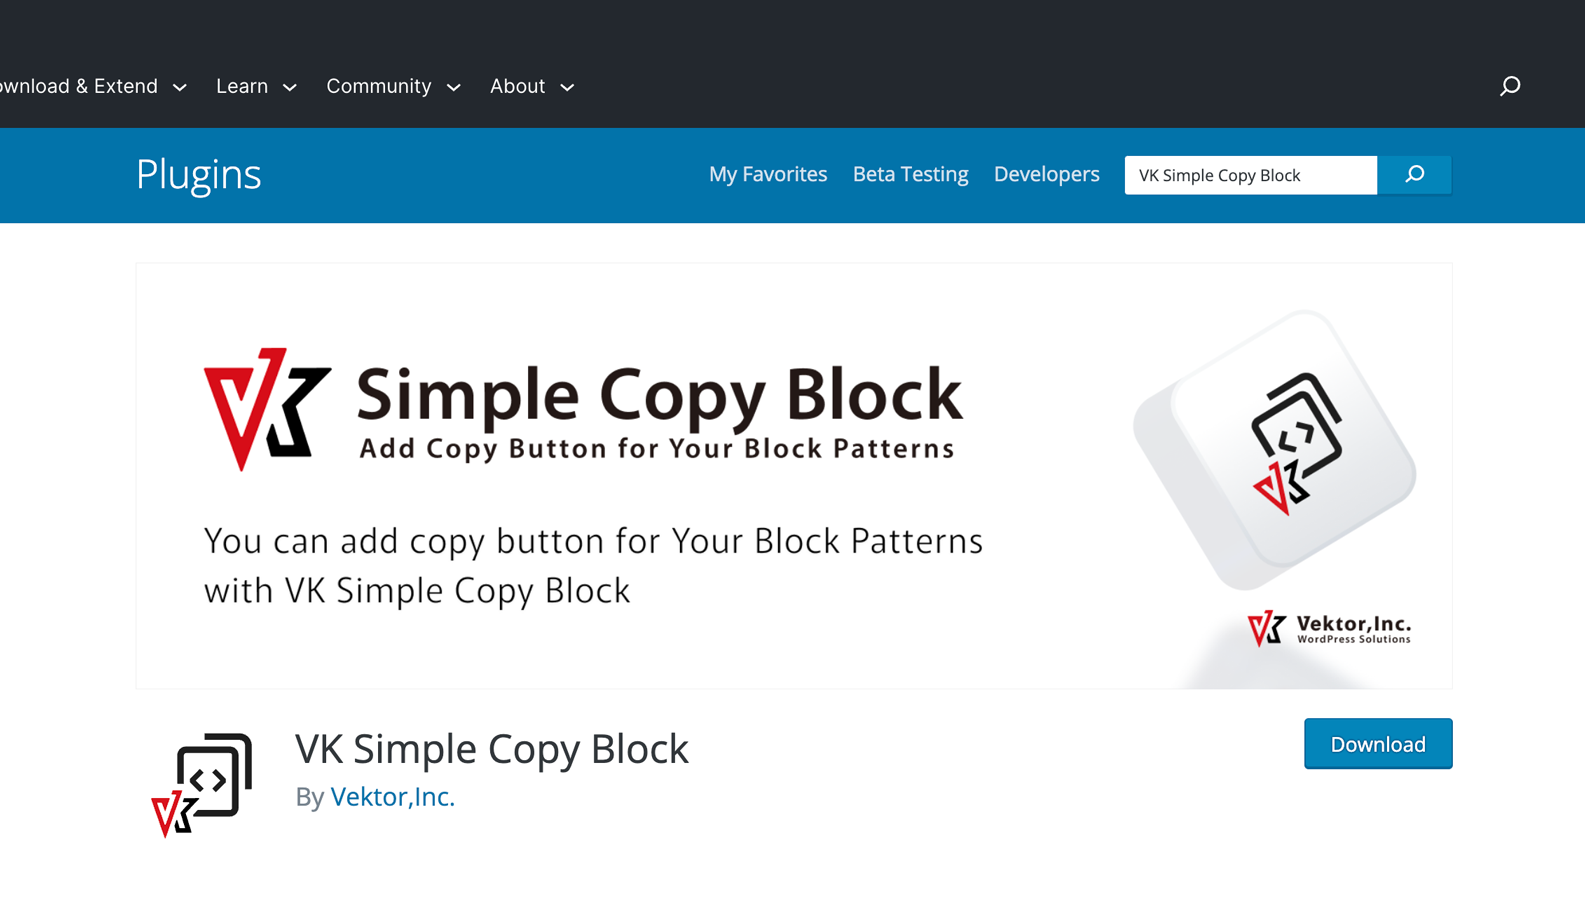 VK Simple Copy Block has been registered in the WordPress.org plugin directory